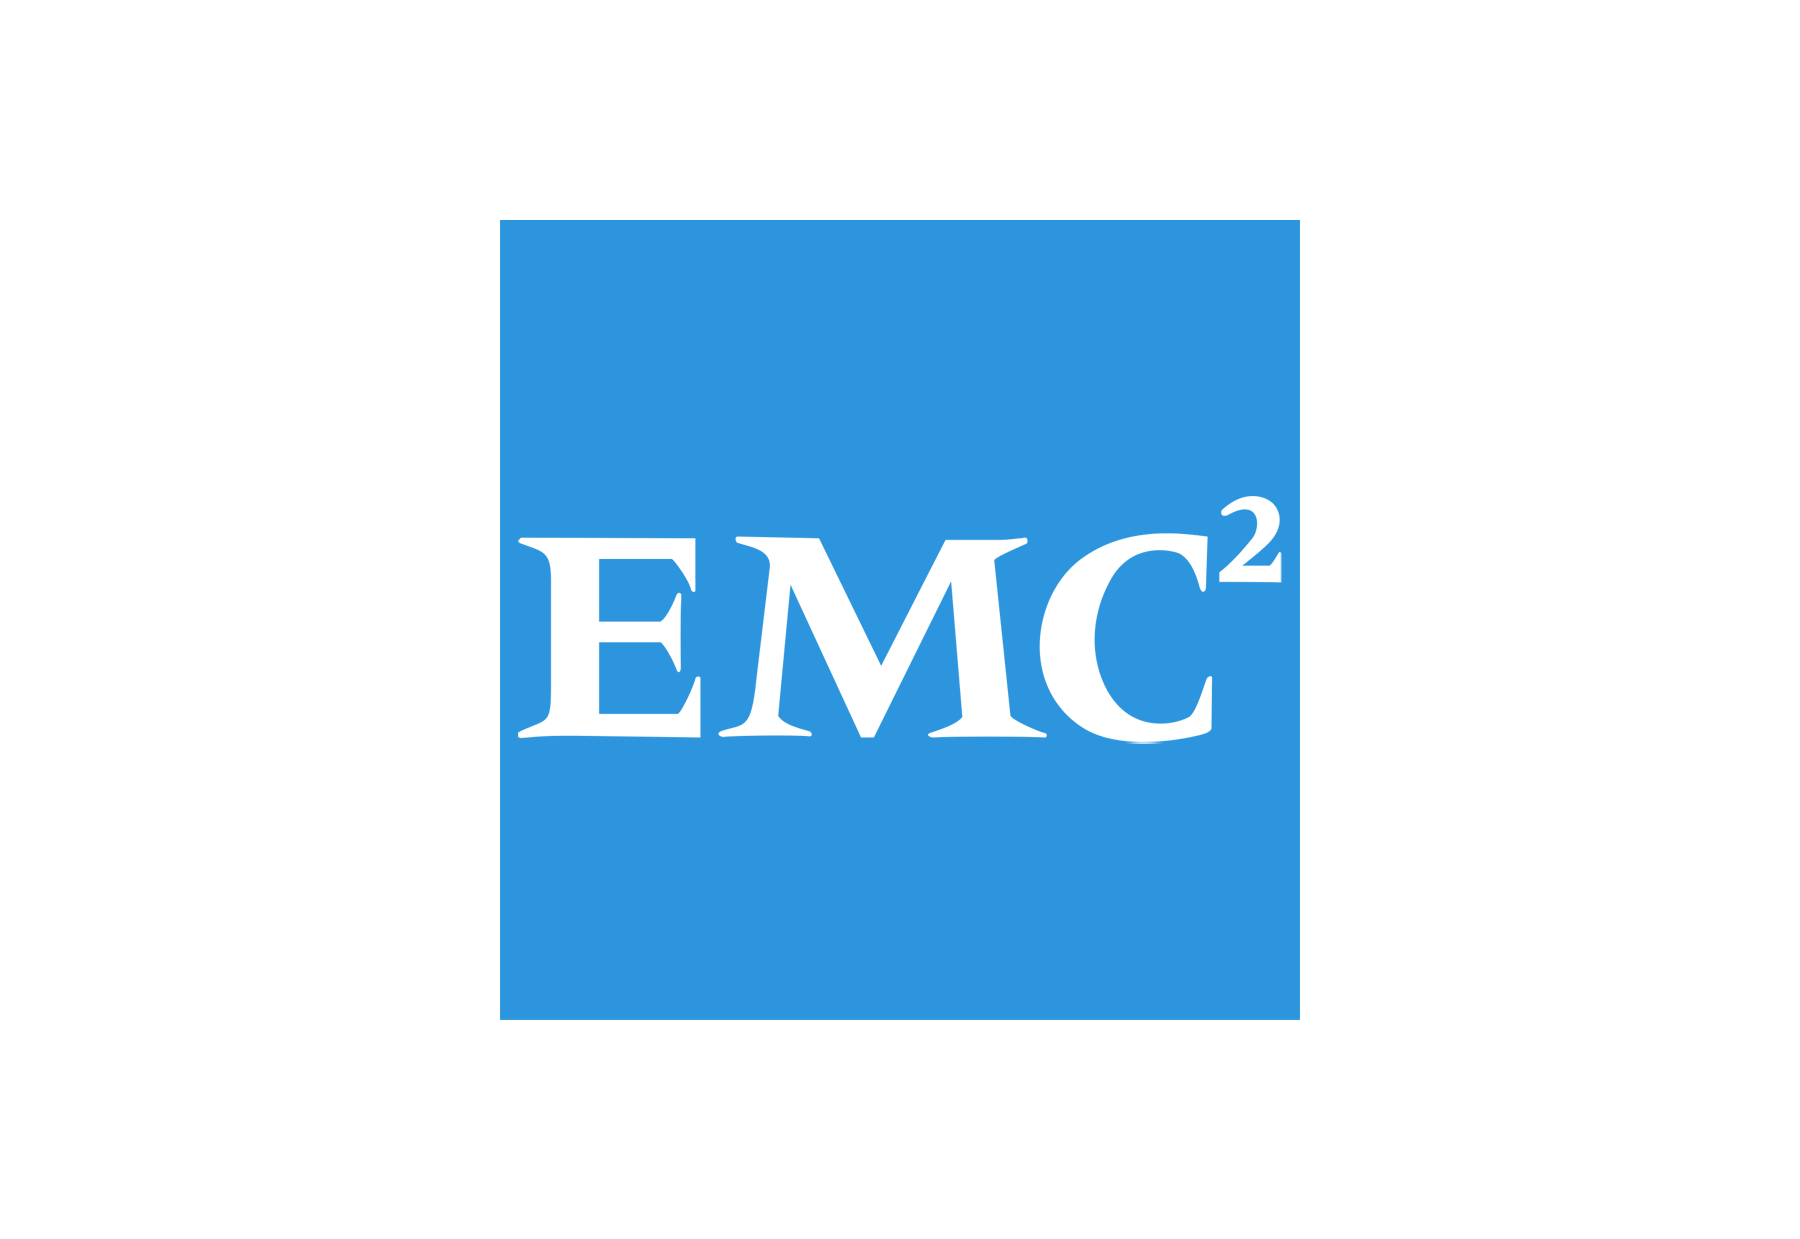 EMC Storage Logo - EMC logo | Dwglogo